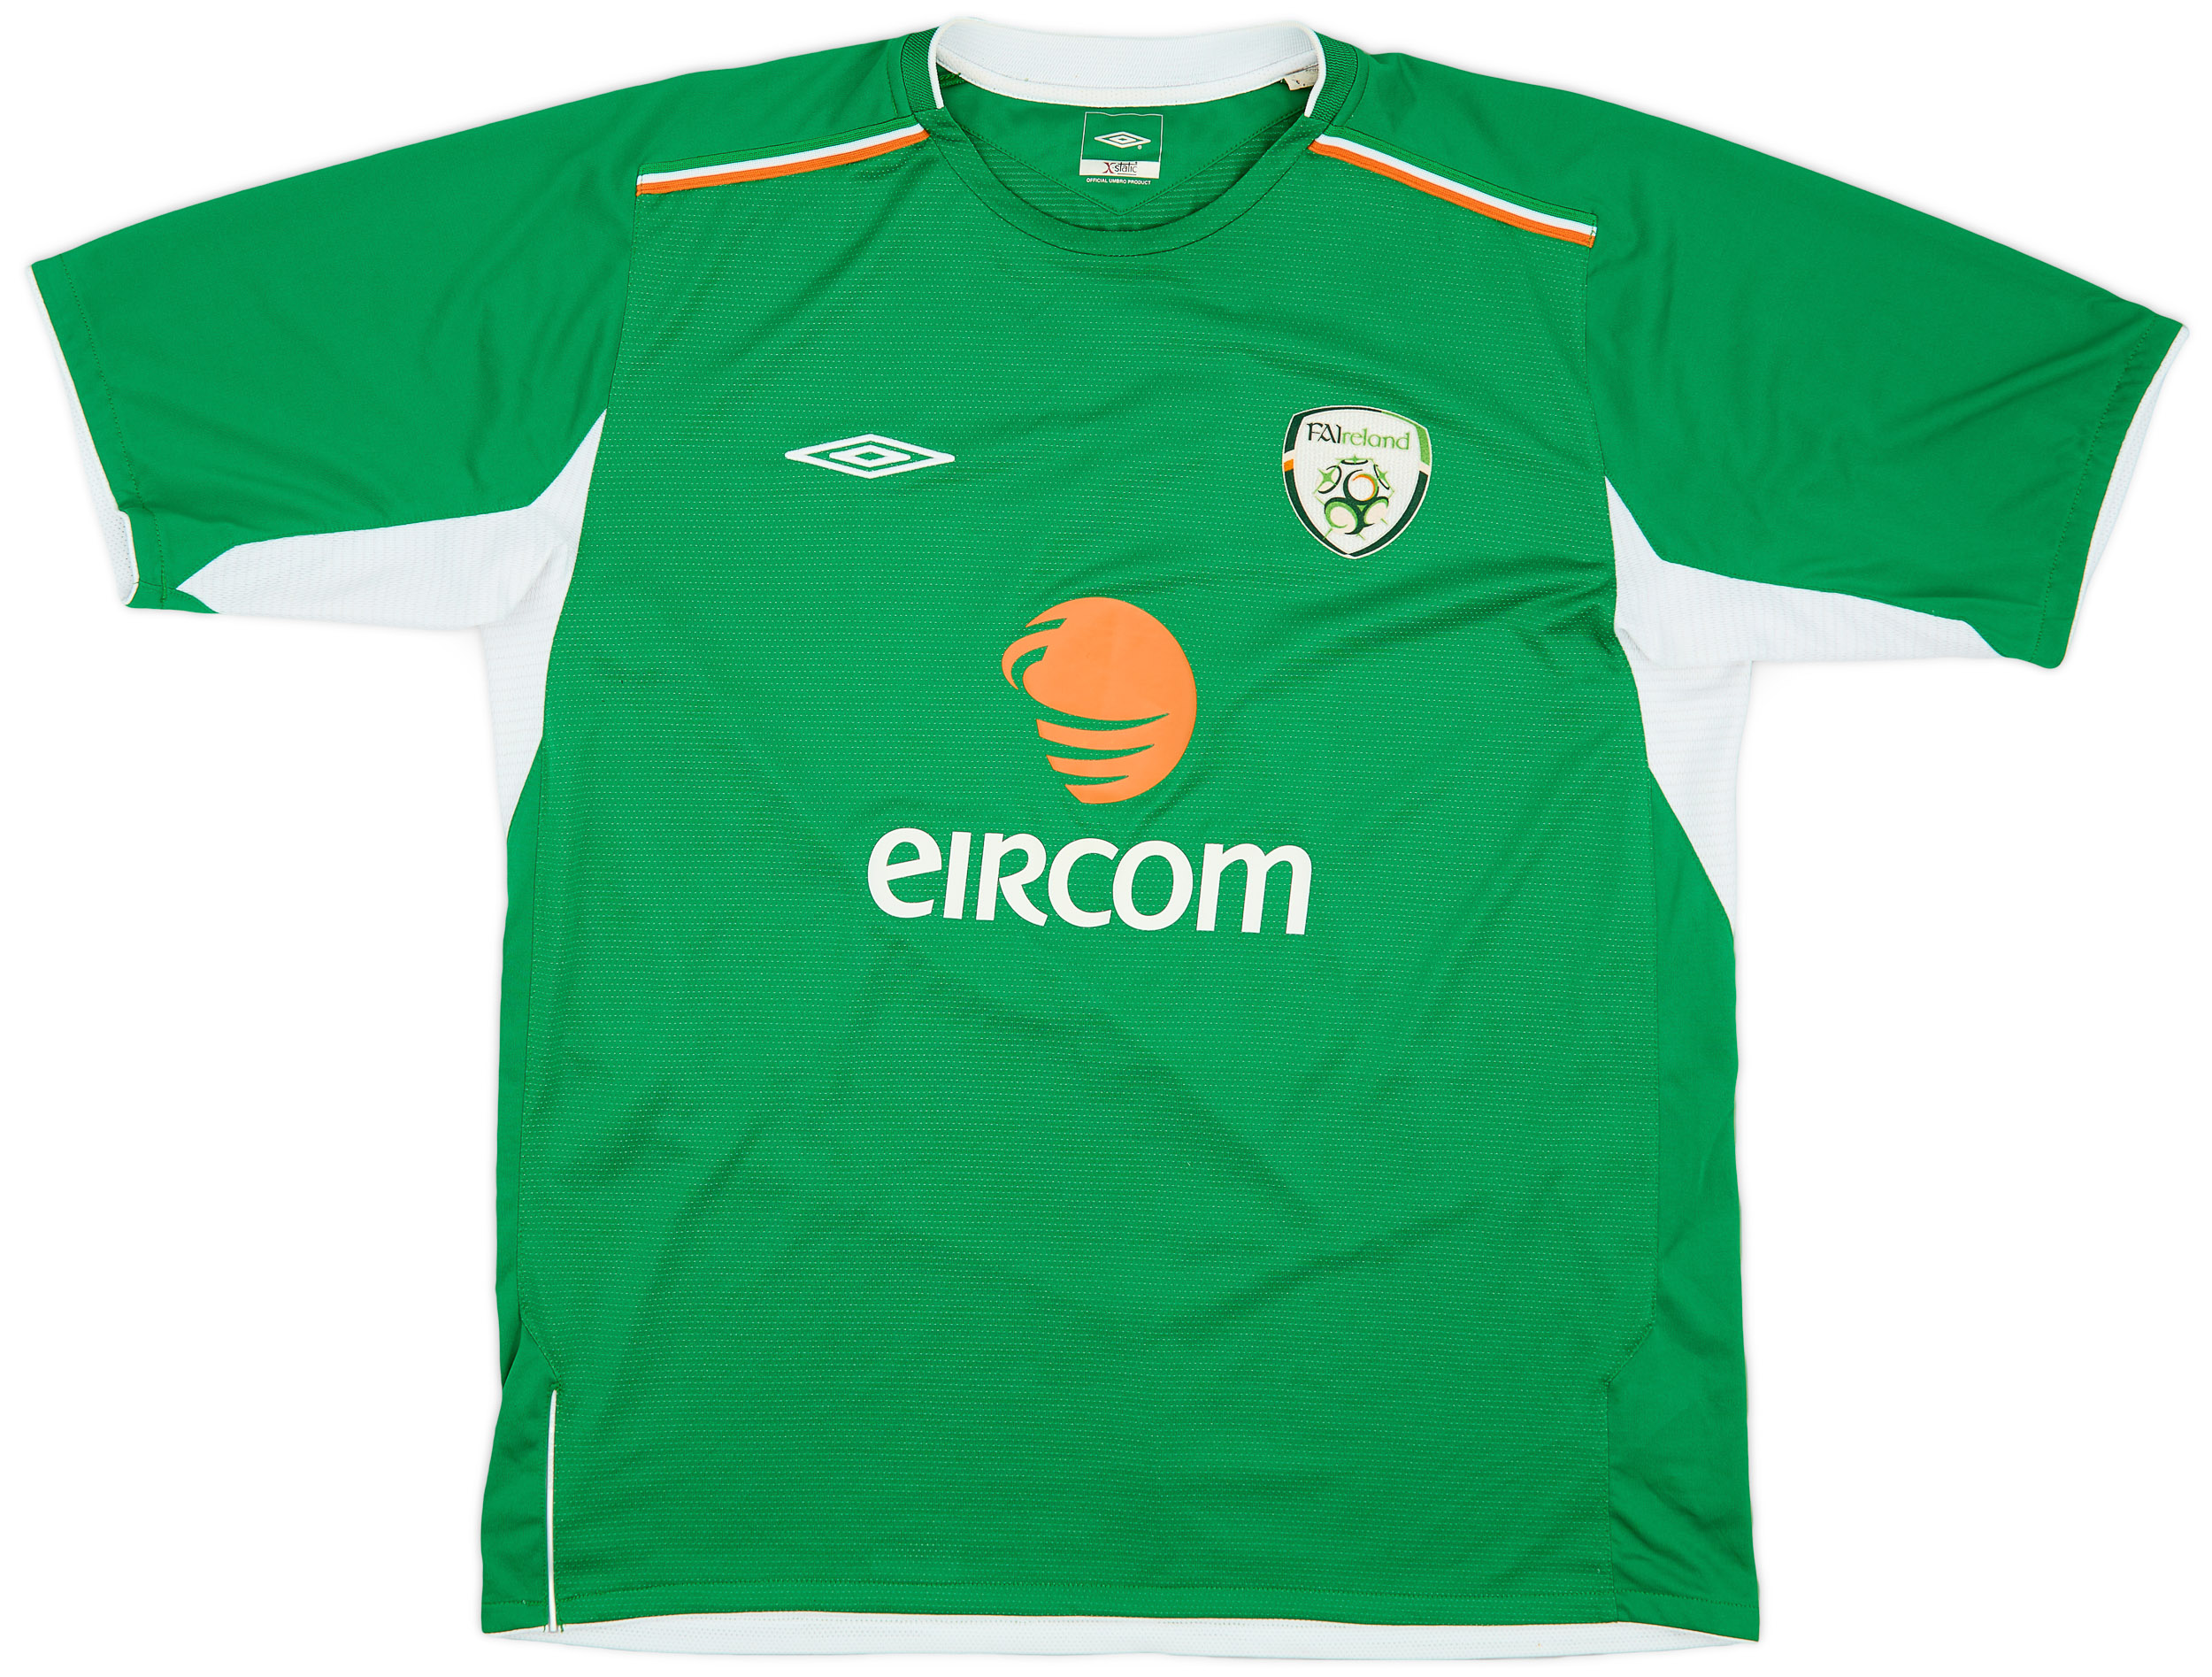 2004-06 Republic of Ireland Home Shirt - 9/10 - ()